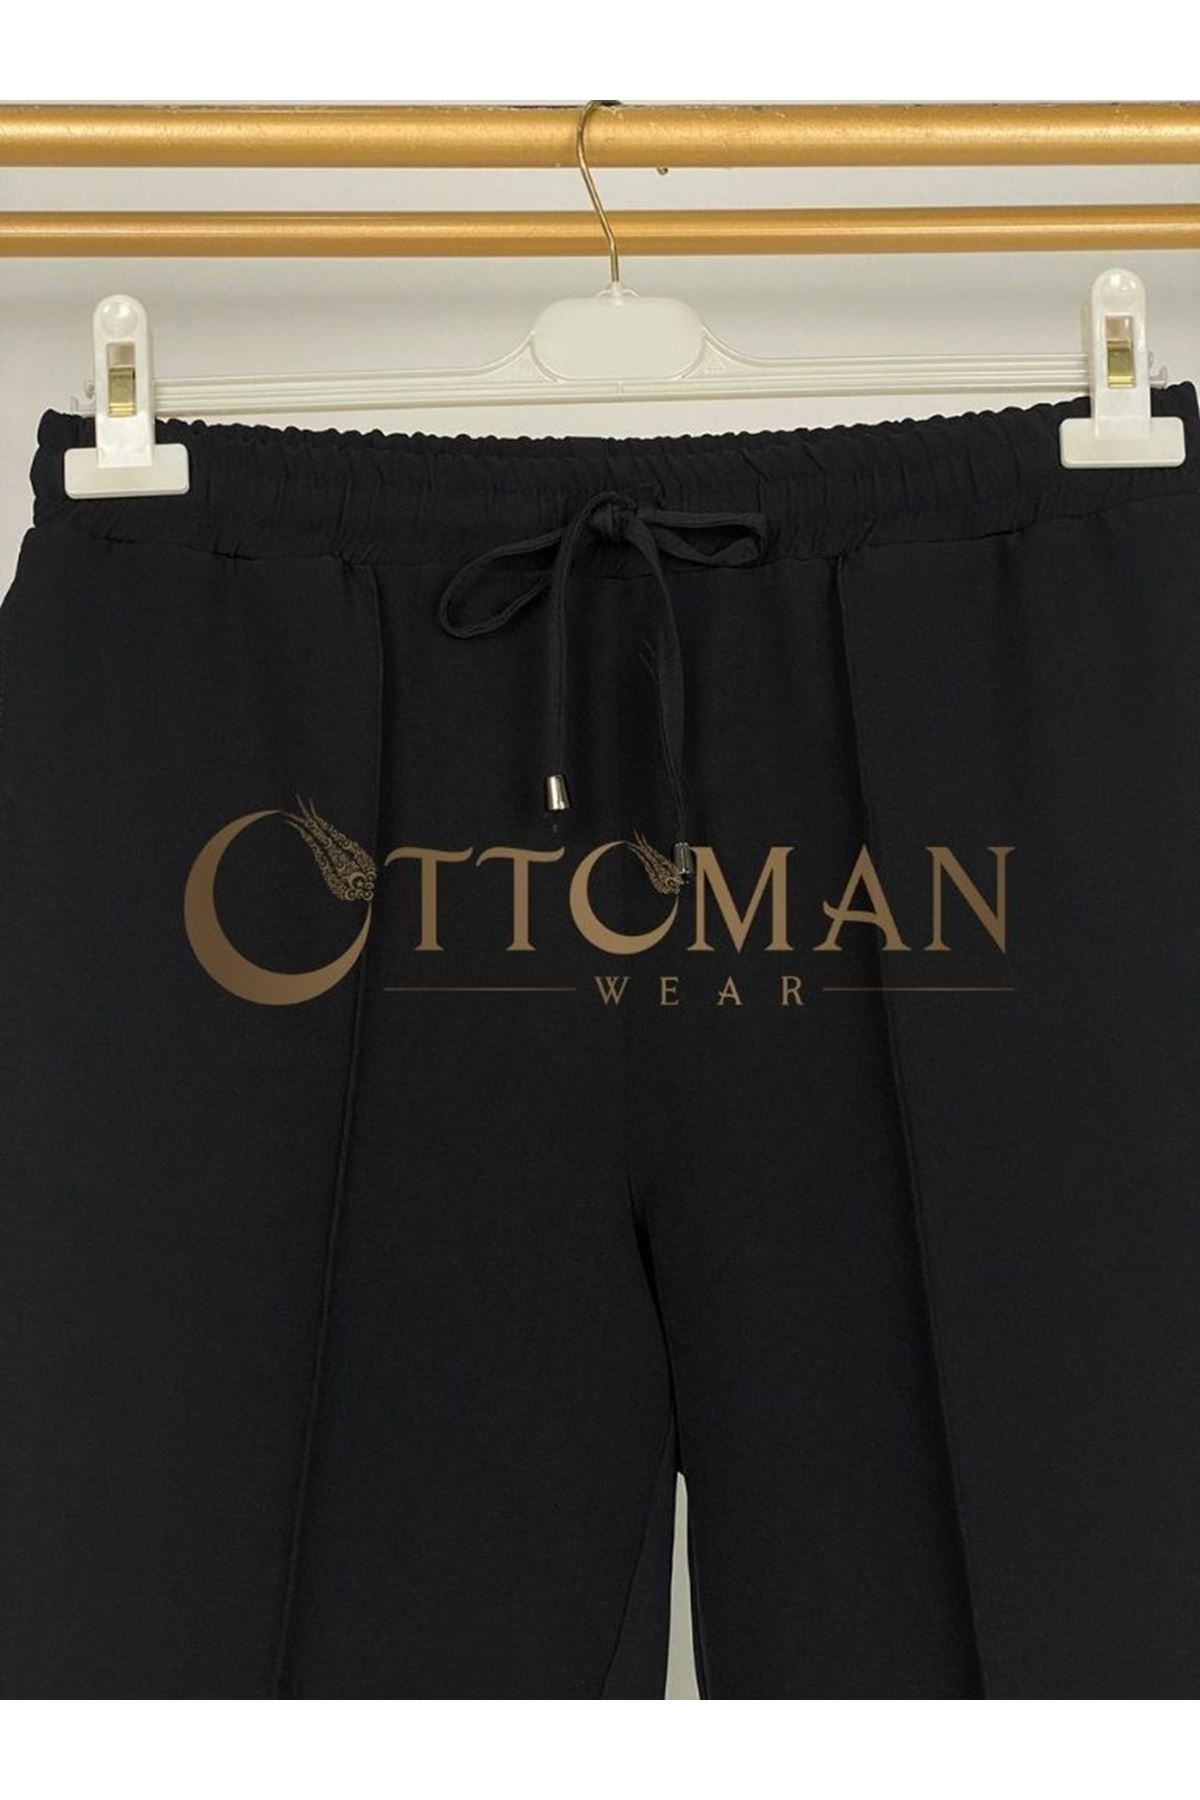 OTW153 Beli Lastikli Pantolon Siyah